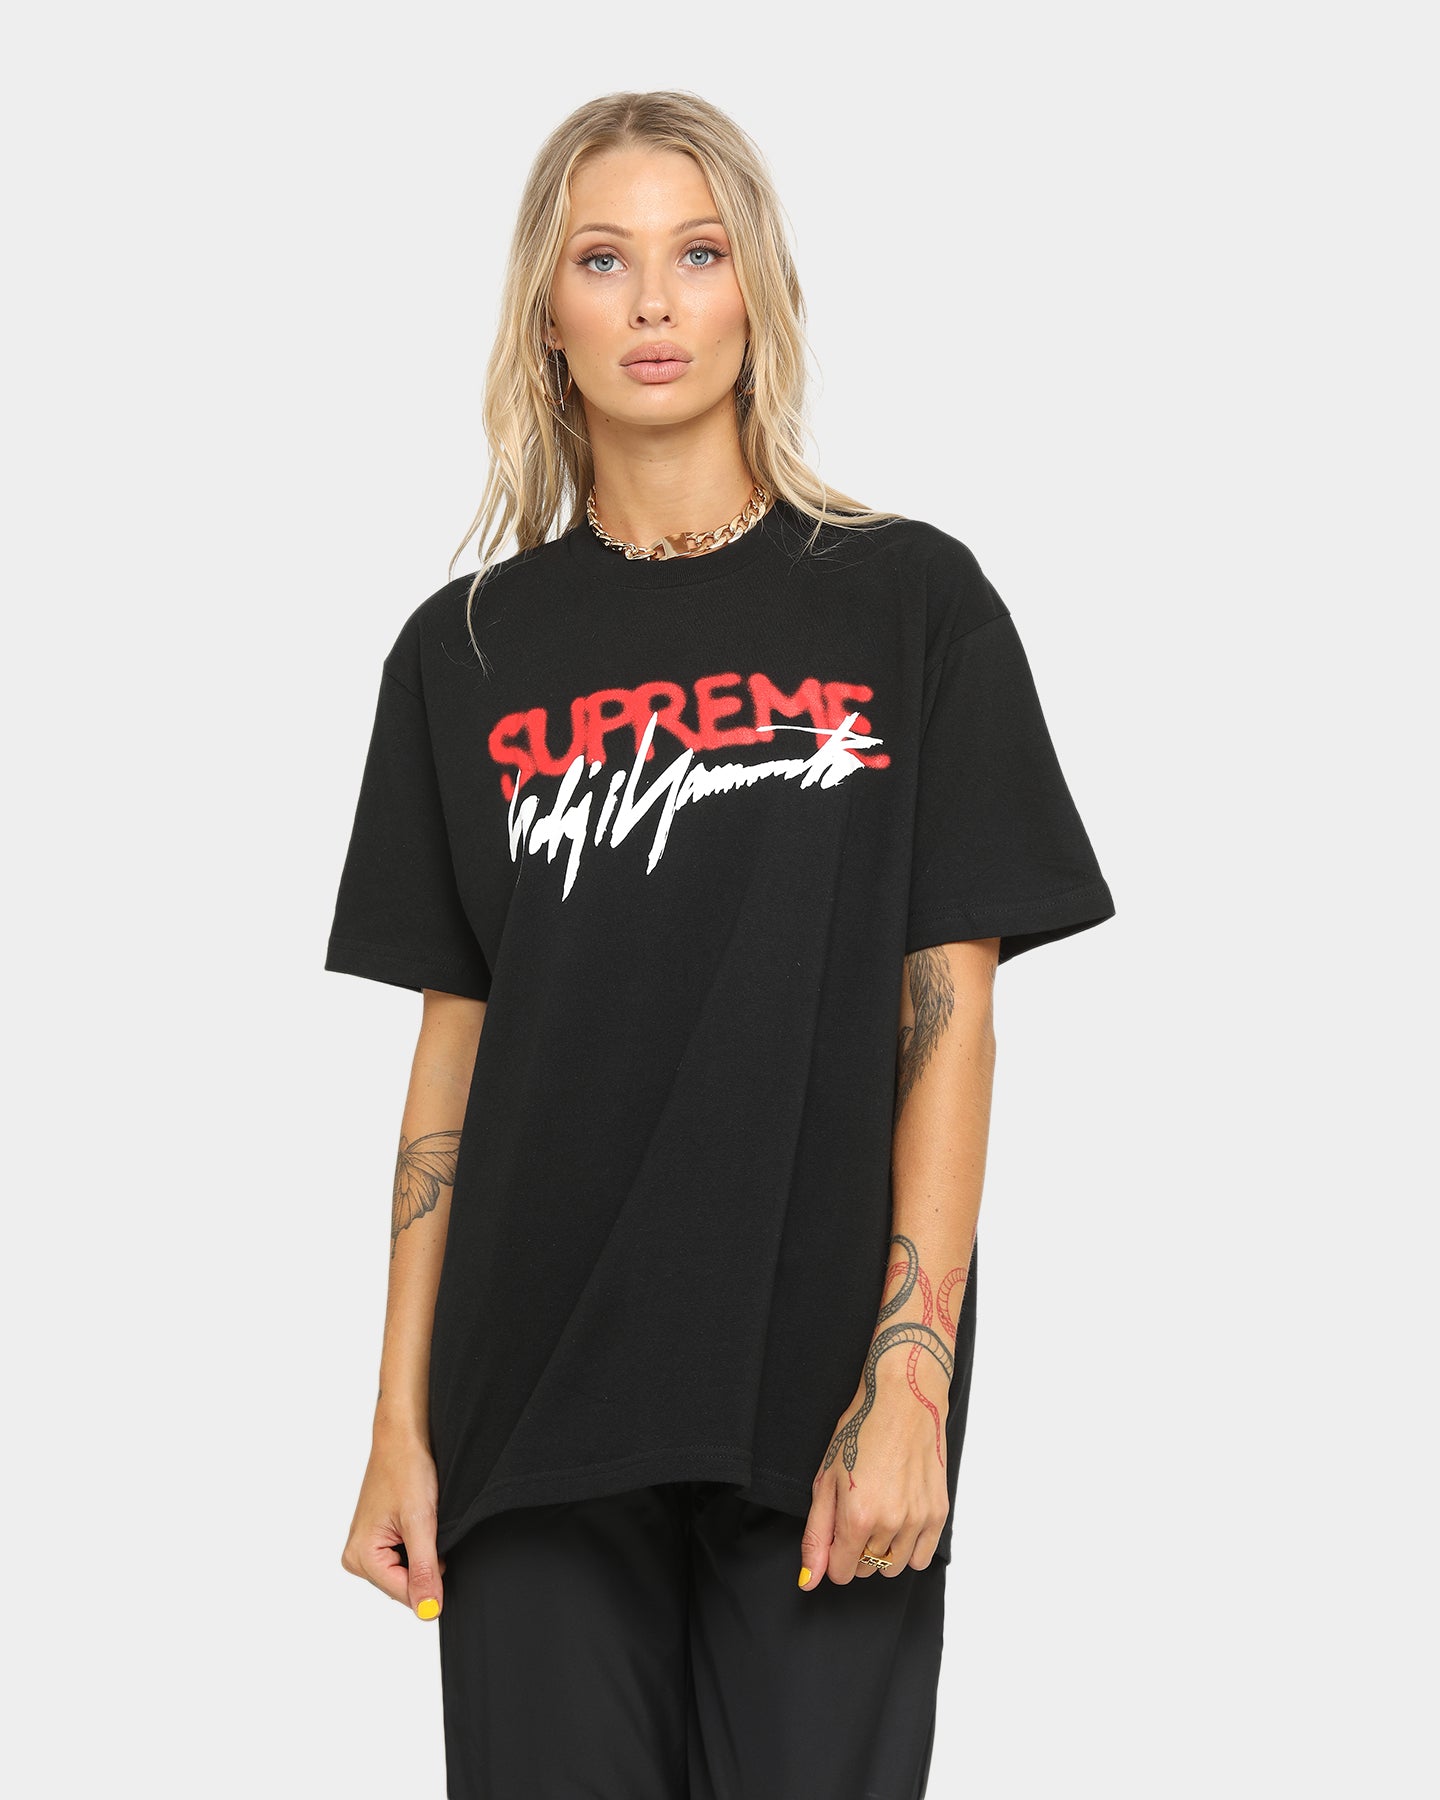 supreme shirt women